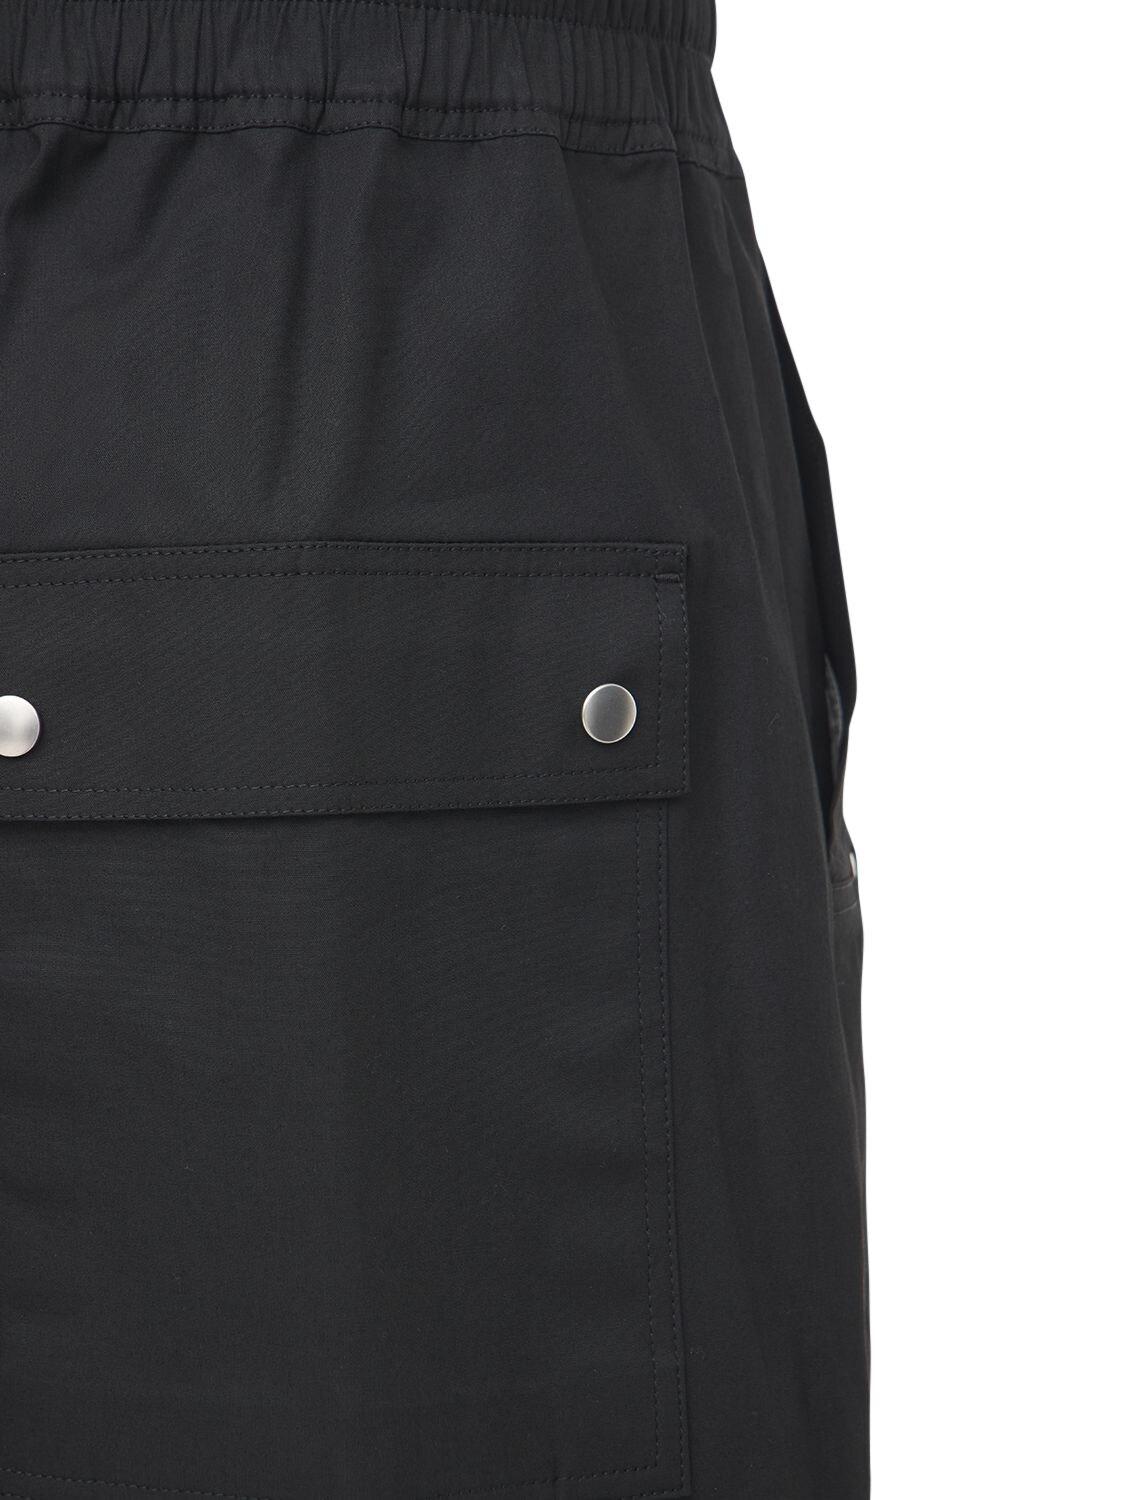 Rick Owens Zip Bela Cotton Pants W/ Drawstring in Black for Men - Lyst